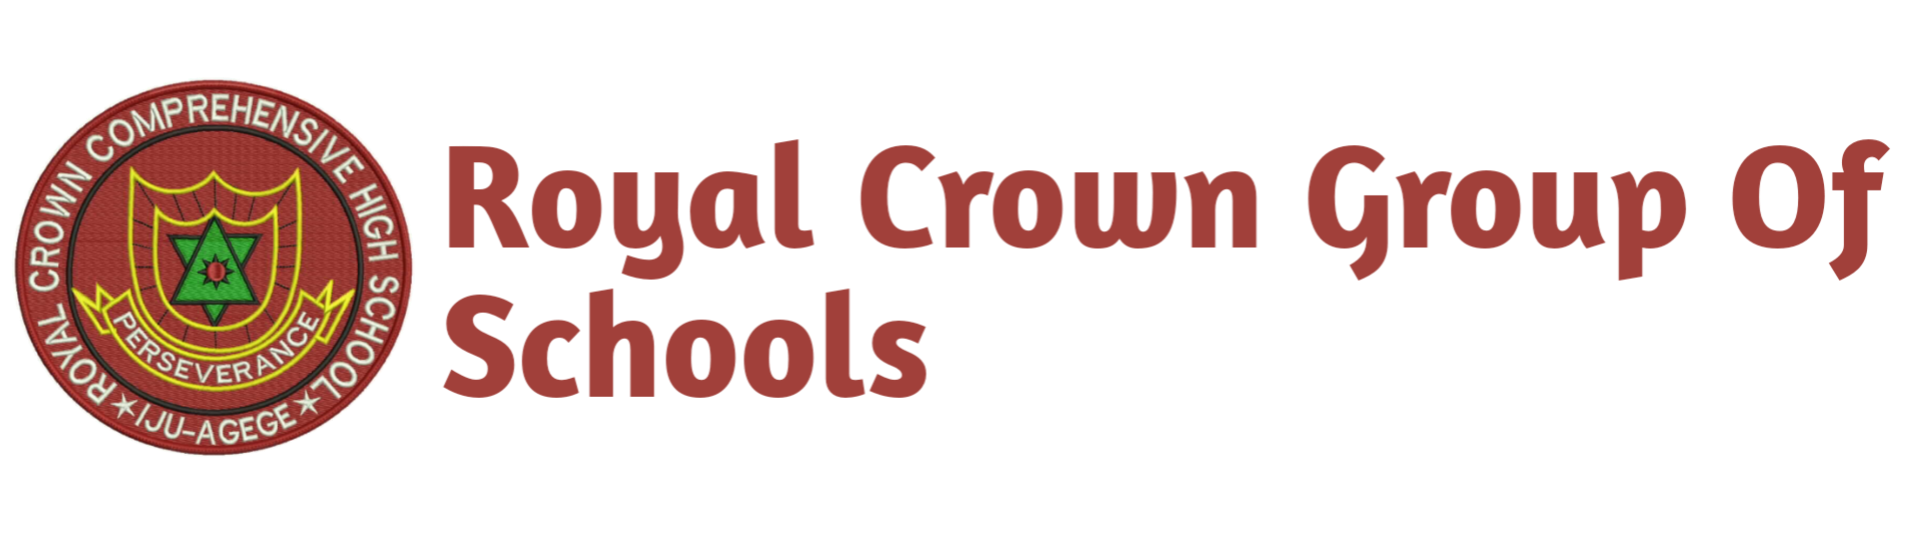 Royal Crown Group Of Schools